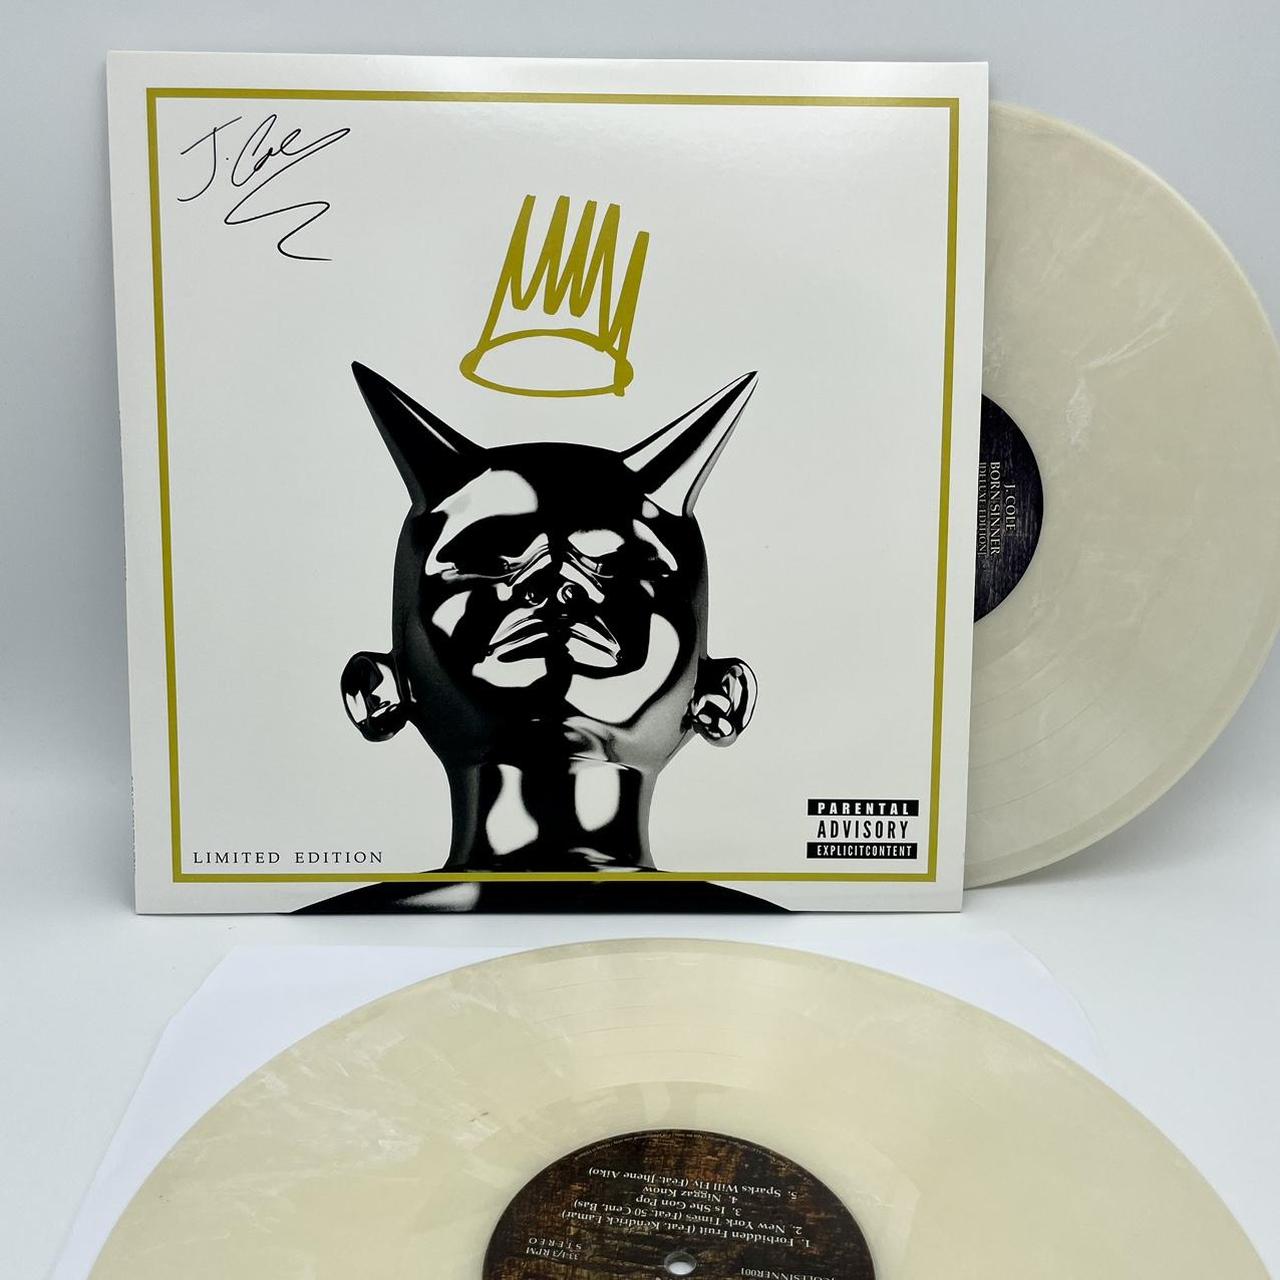 Kanye West - Kon The Louis Vuitton Don - 2x LP Vinyl - Ear Candy Music